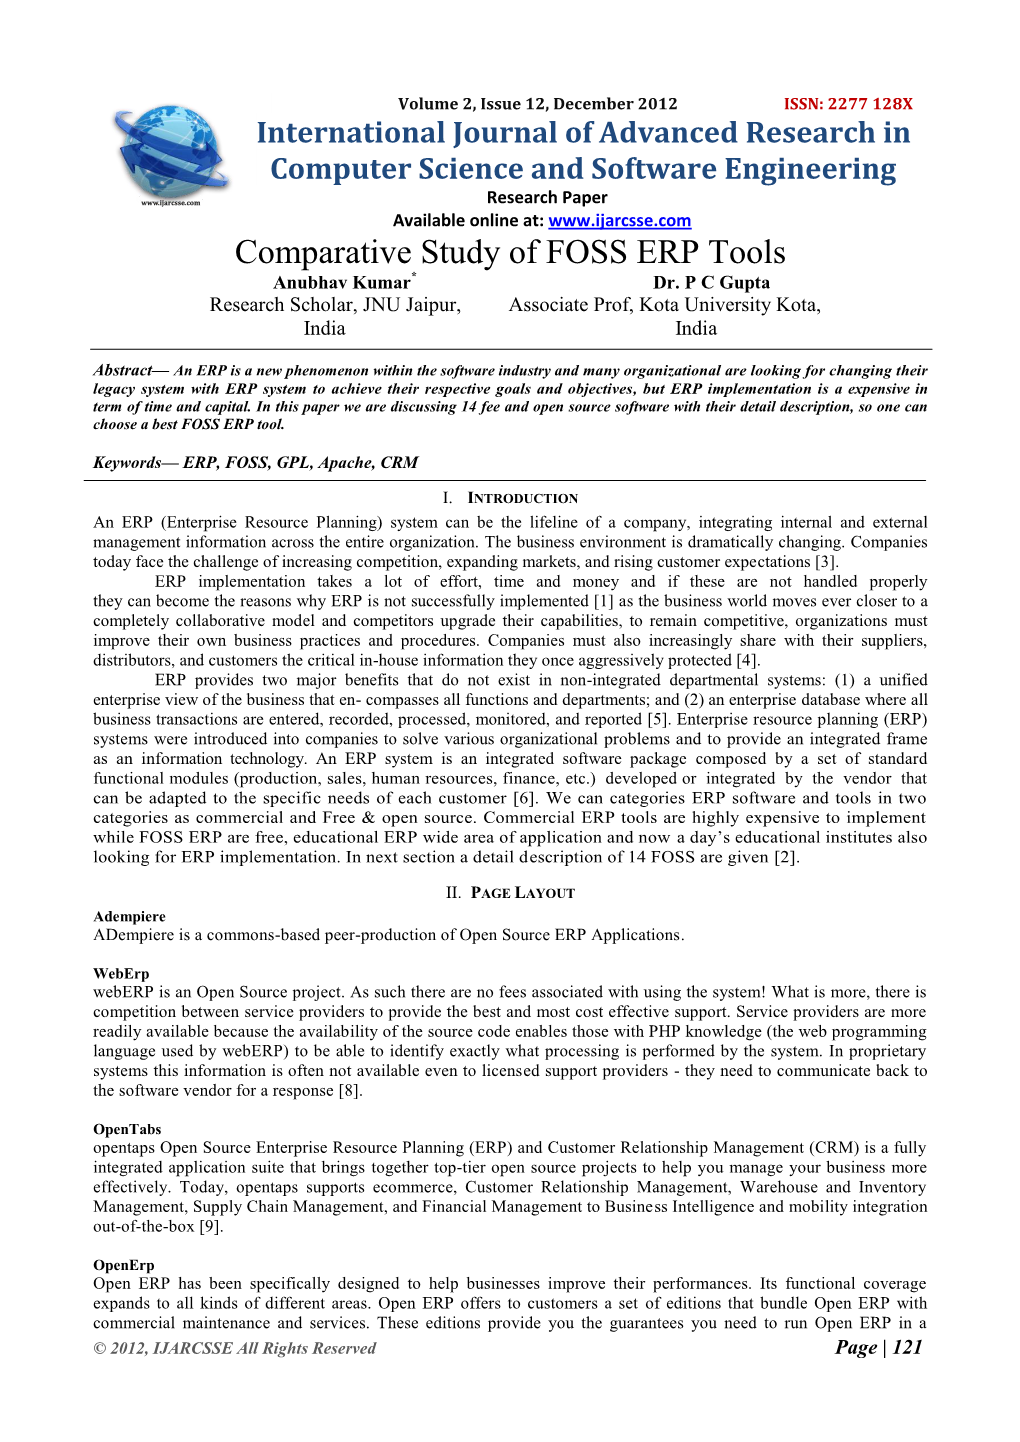 Comparative Study of FOSS ERP Tools Anubhav Kumar* Dr